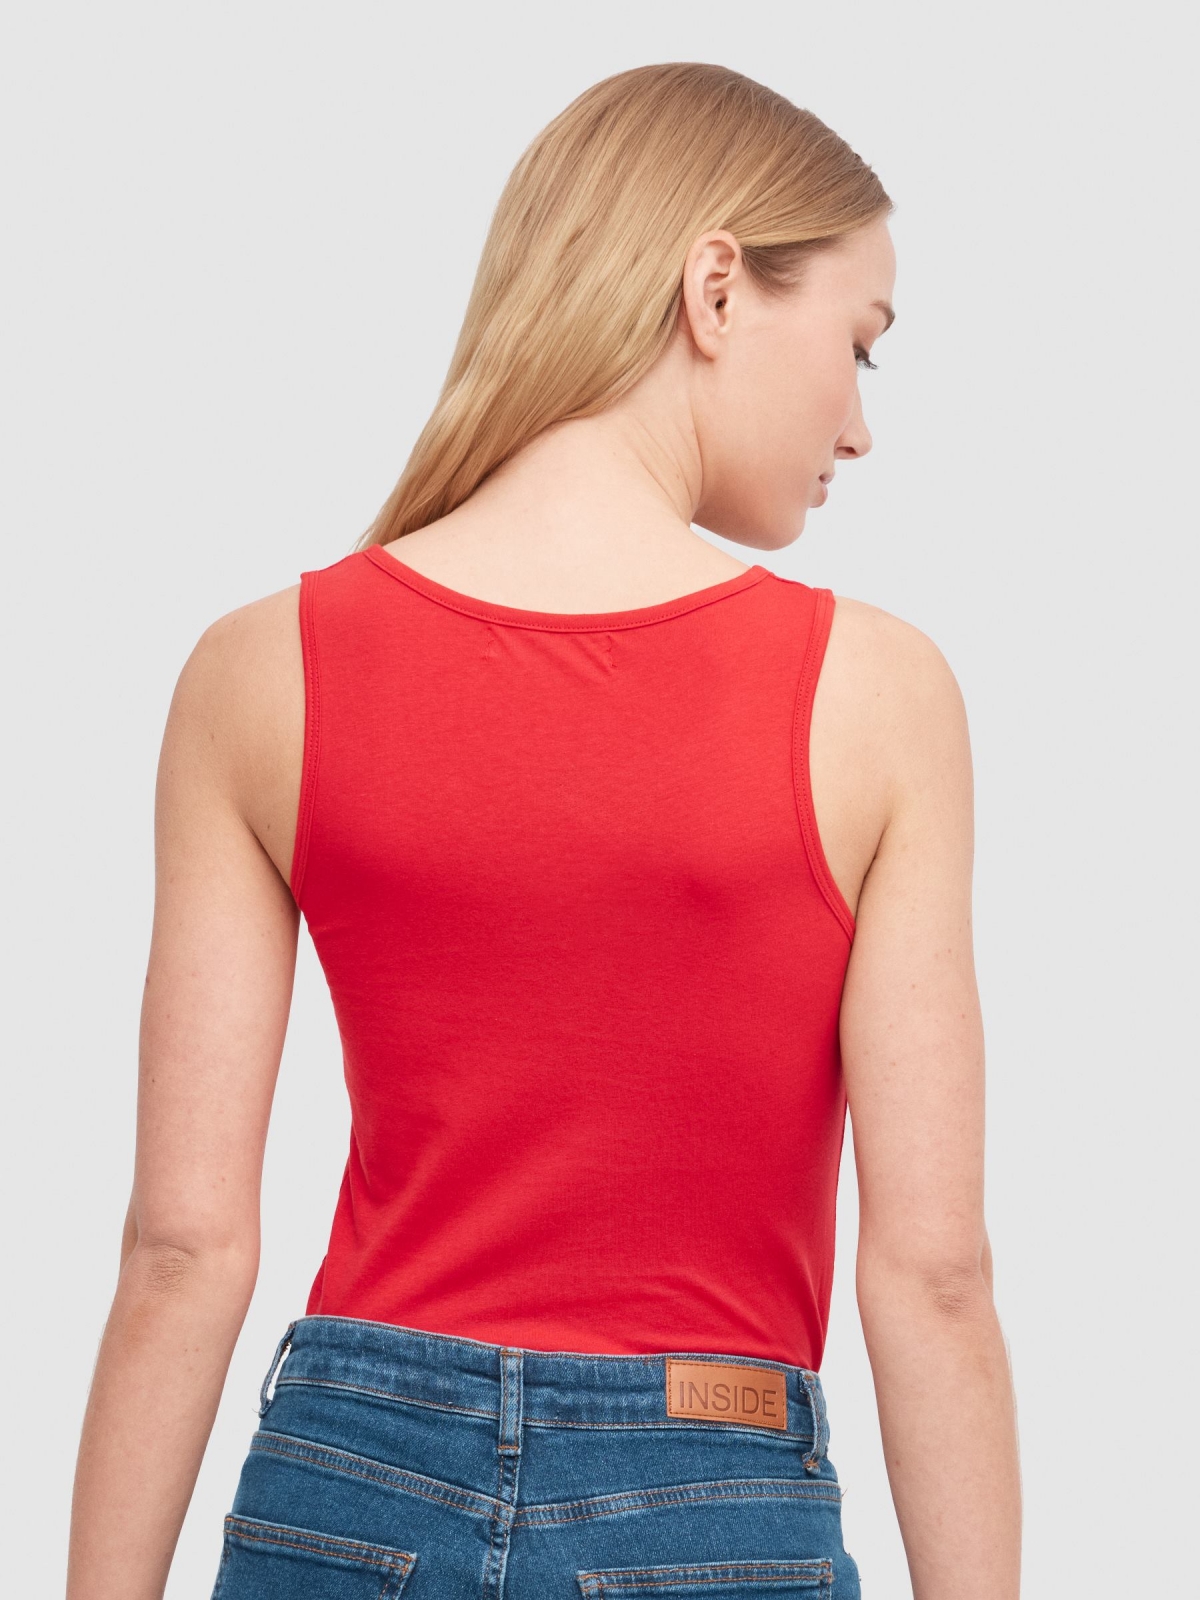 Camiseta cuello pico botones rojo vista media trasera